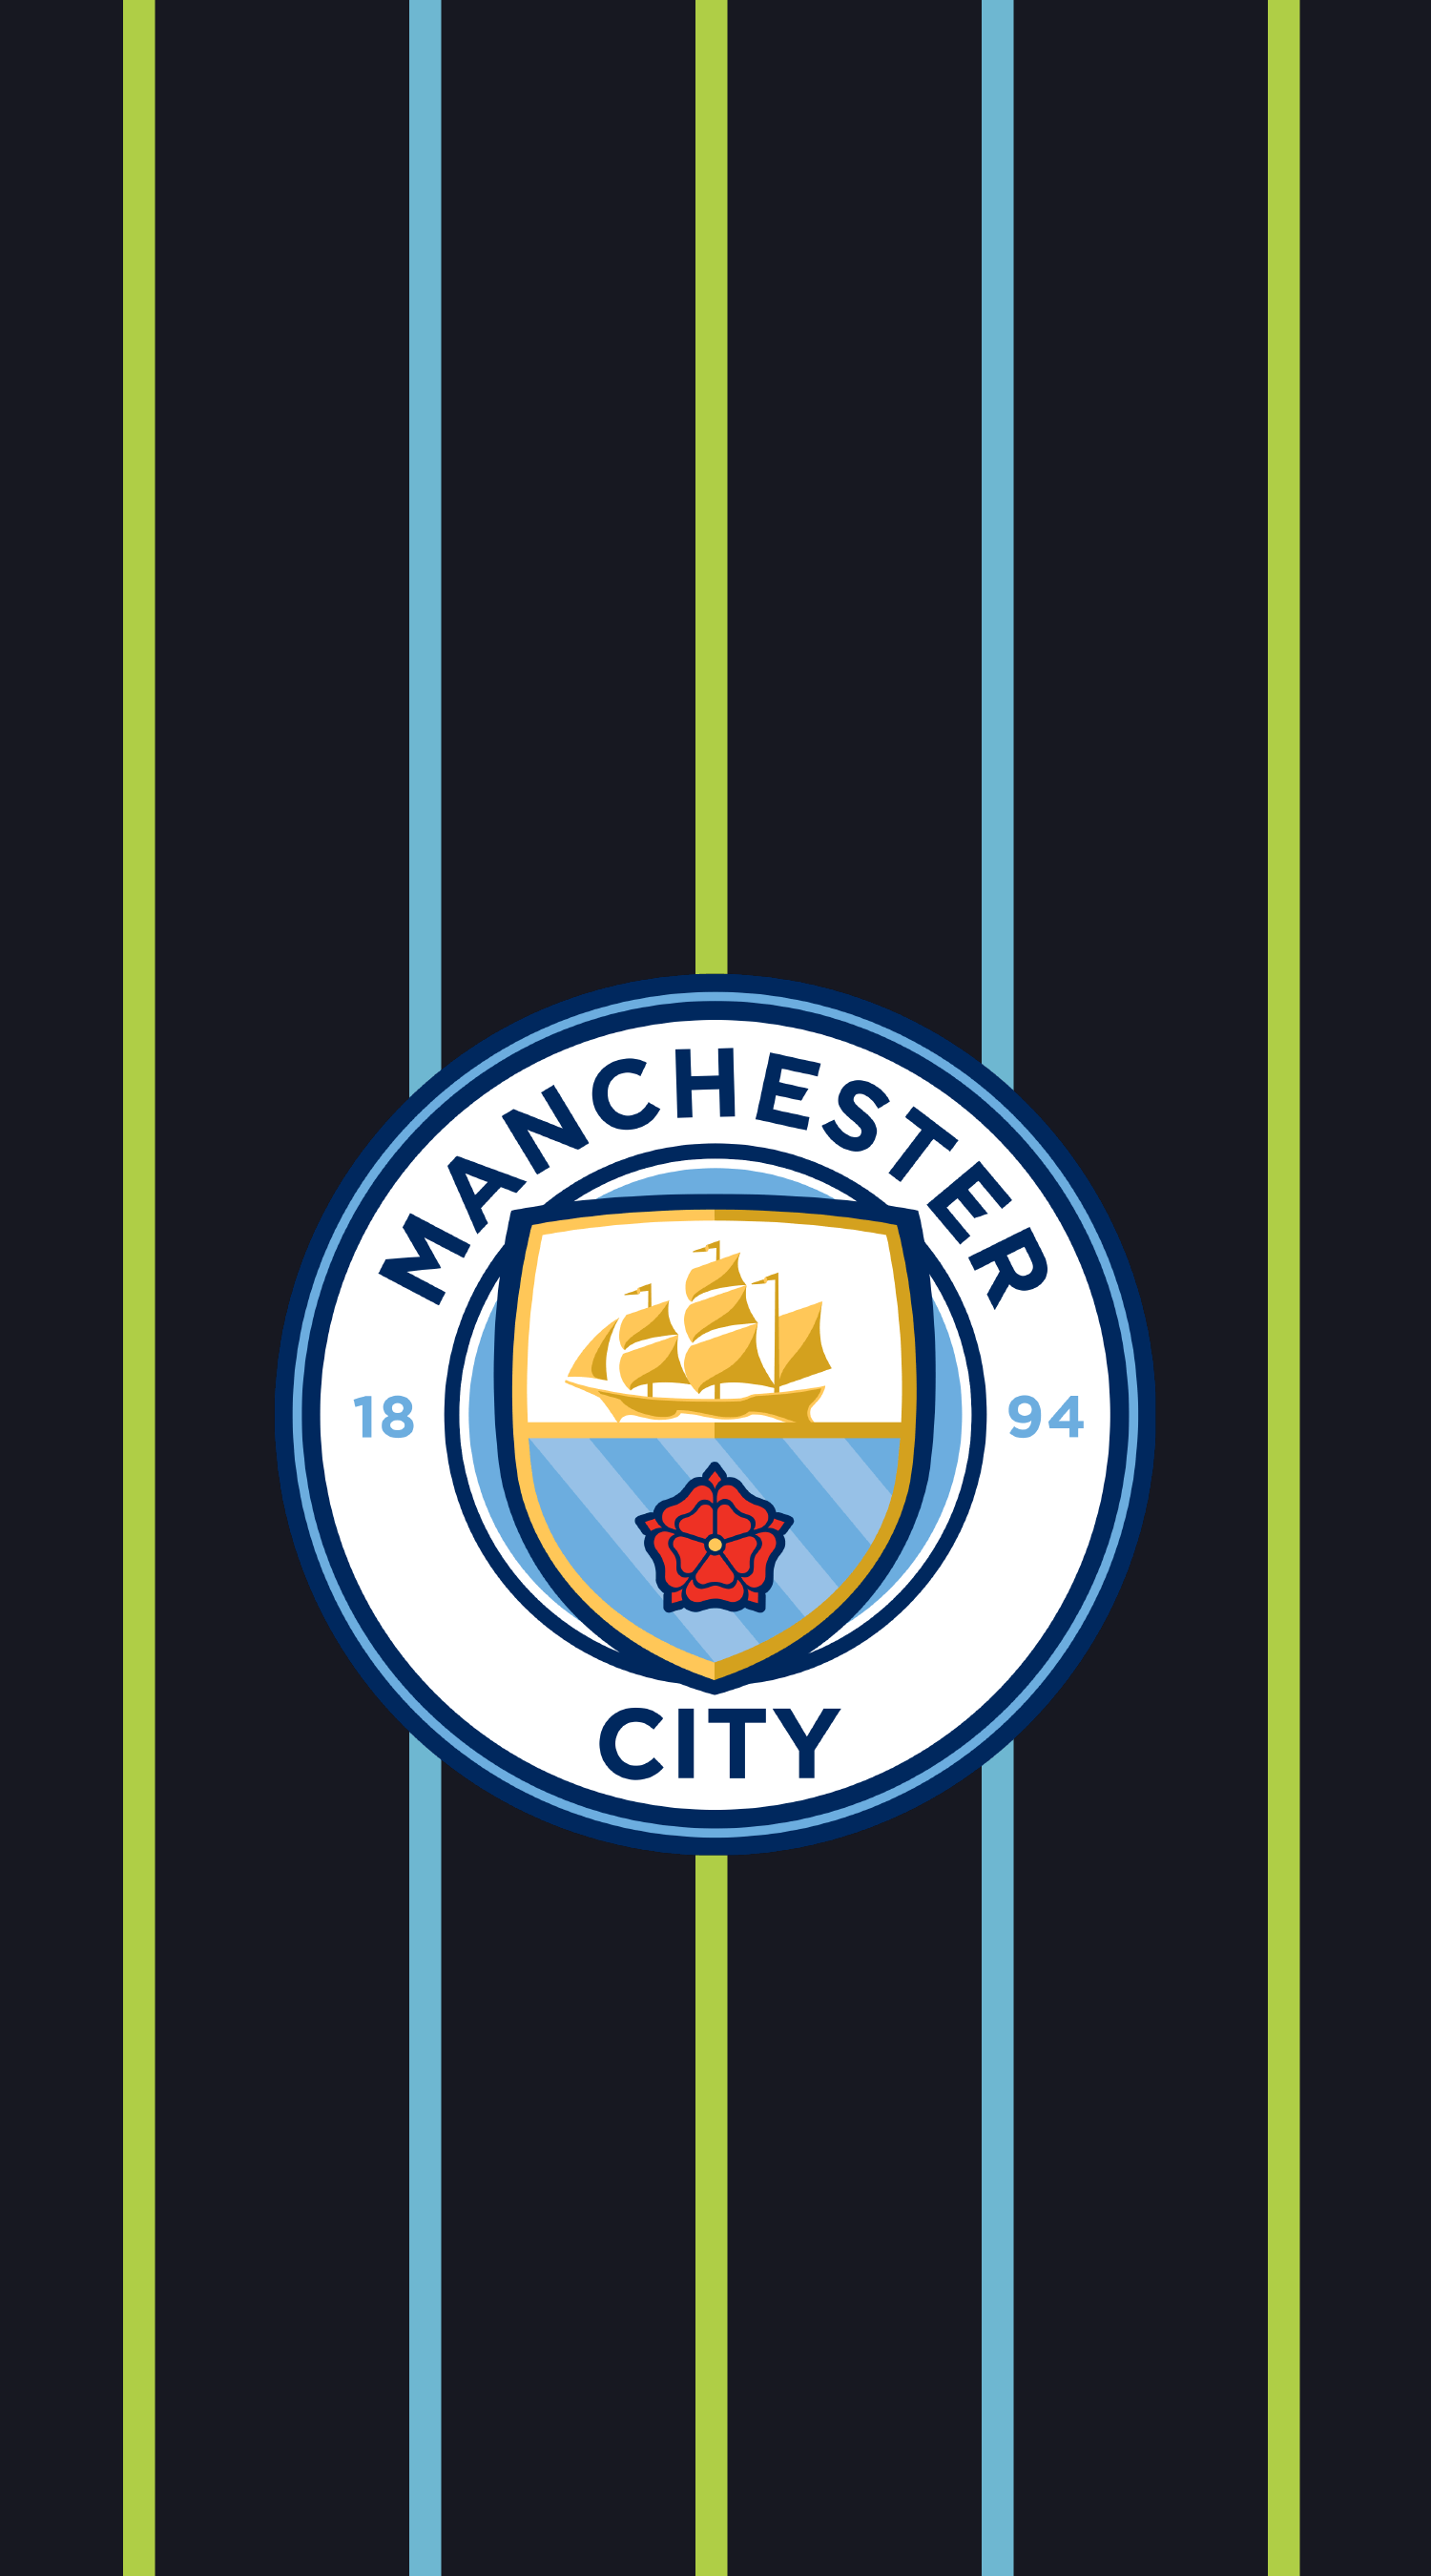 Manchester City Logo Logodix